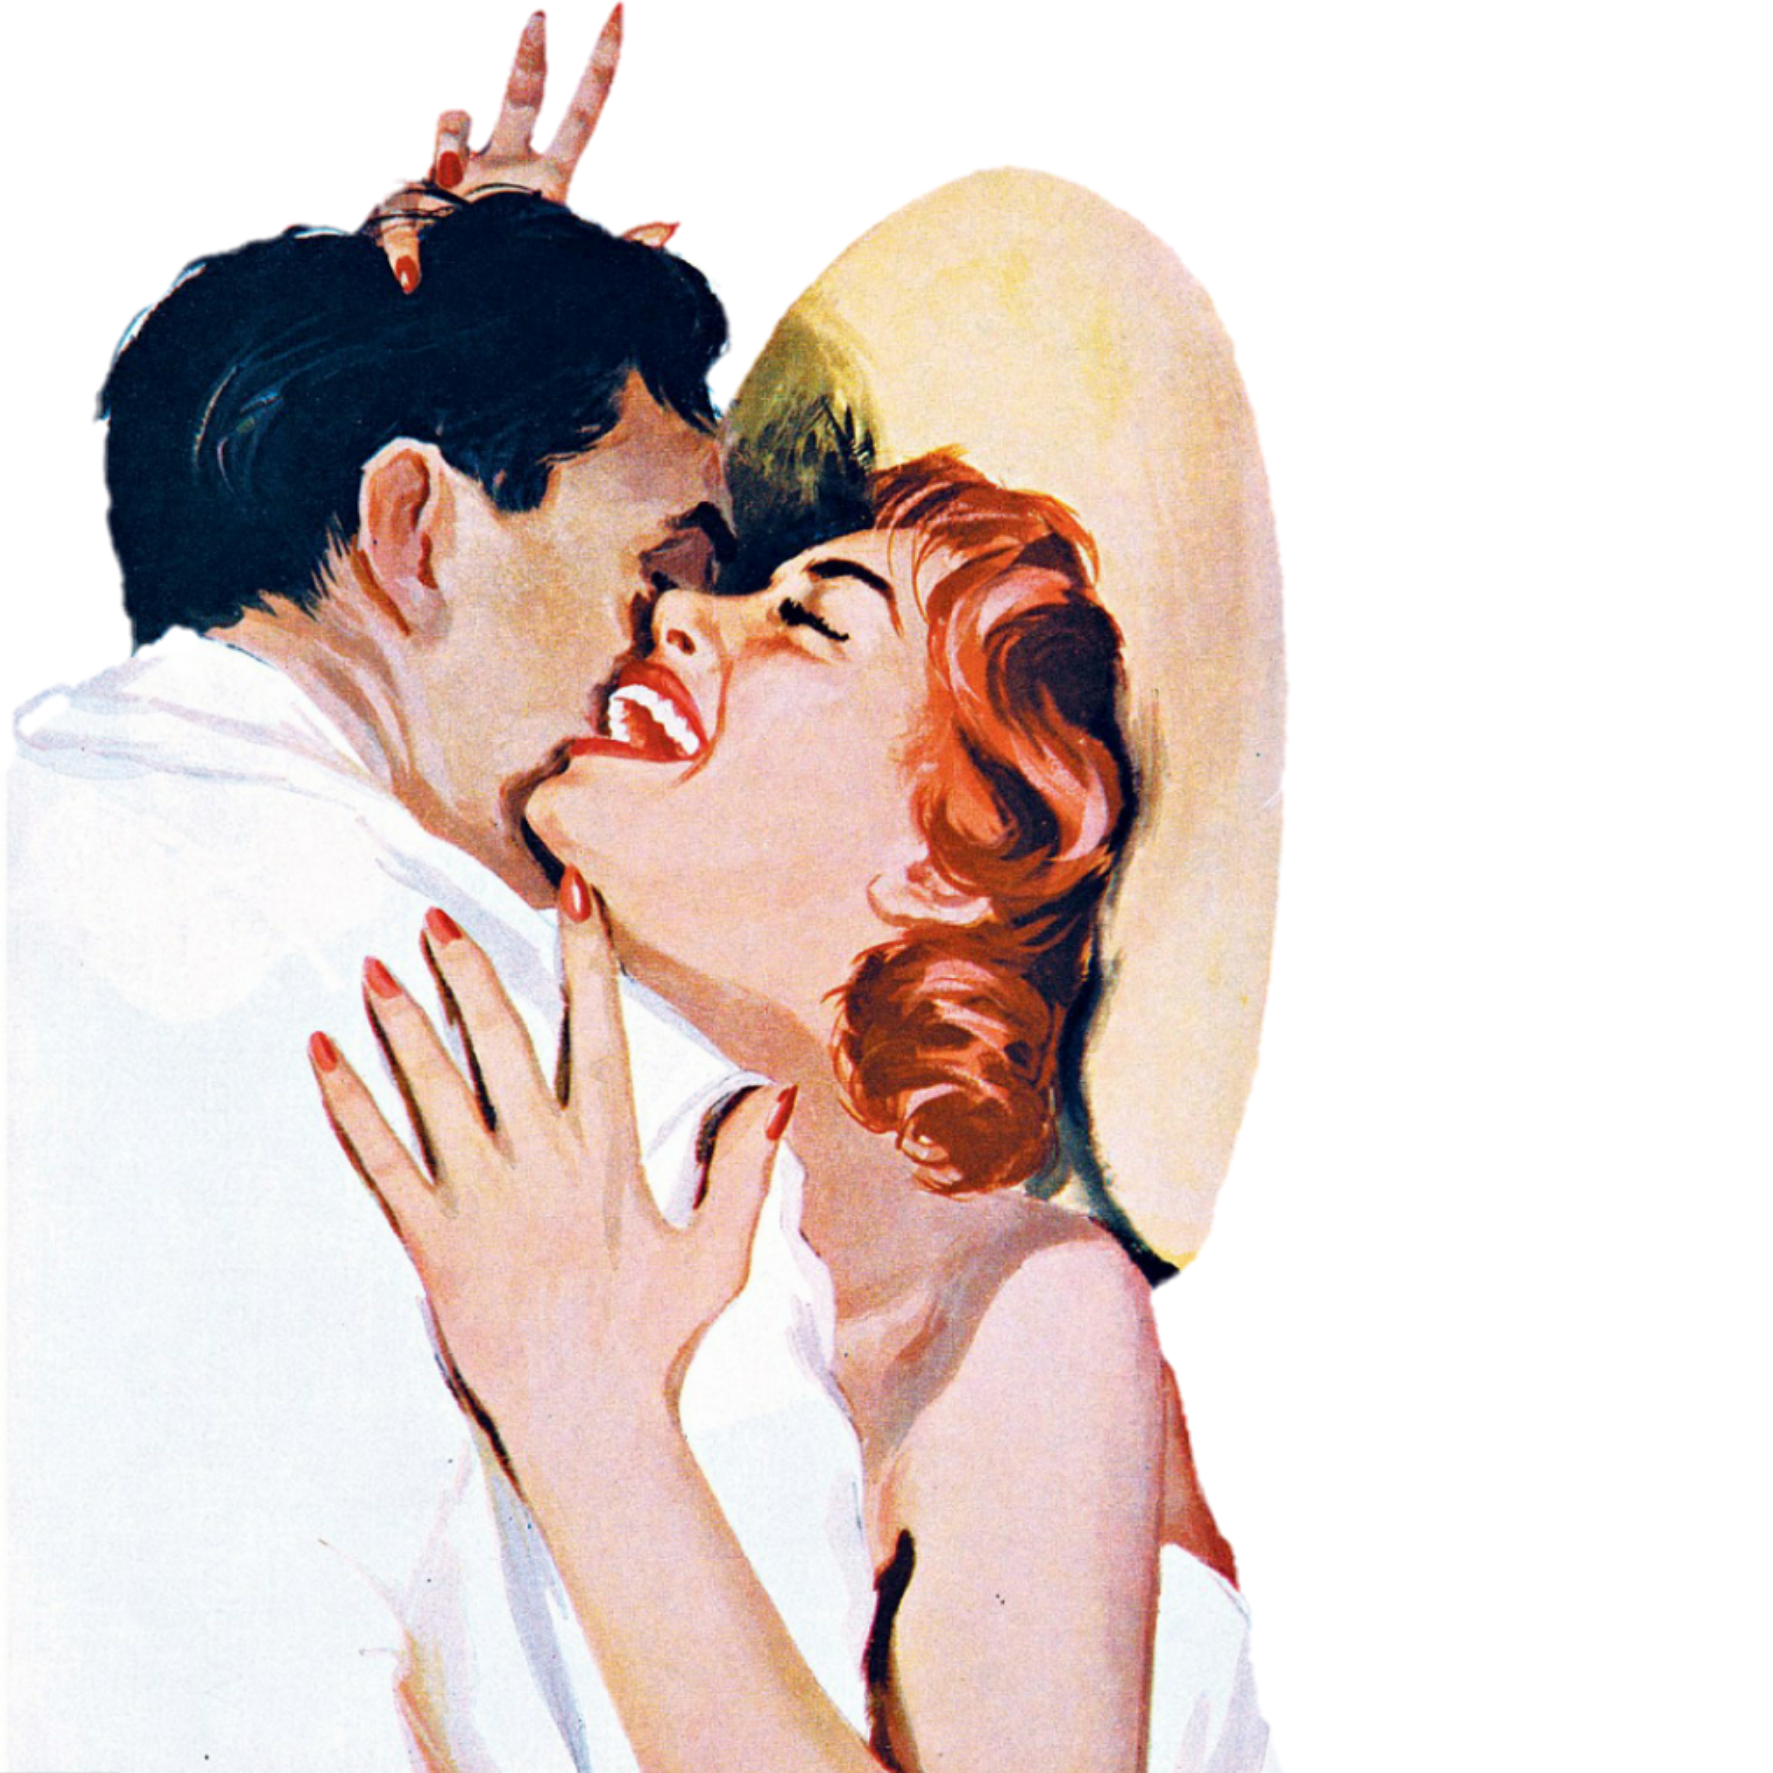 Иллюстрации в стиле ретро. Пин ап мужчина и женщина. Поцелуй ретро. Пин ап поцелуй.